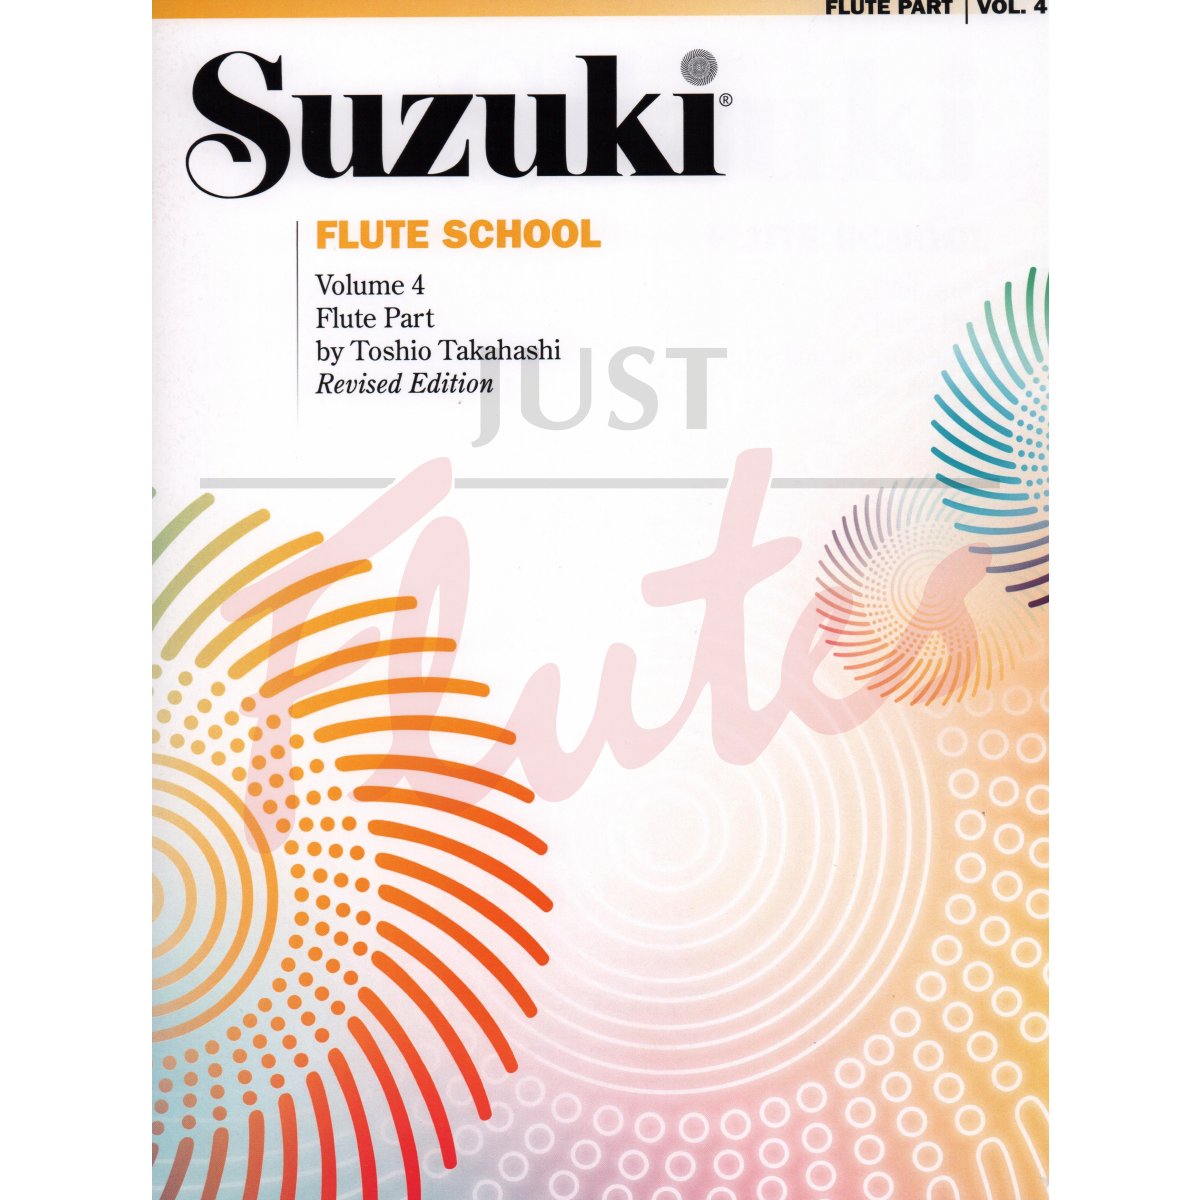 Suzuki Flute School Vol 4 (Revised Edition) [Flute Part]